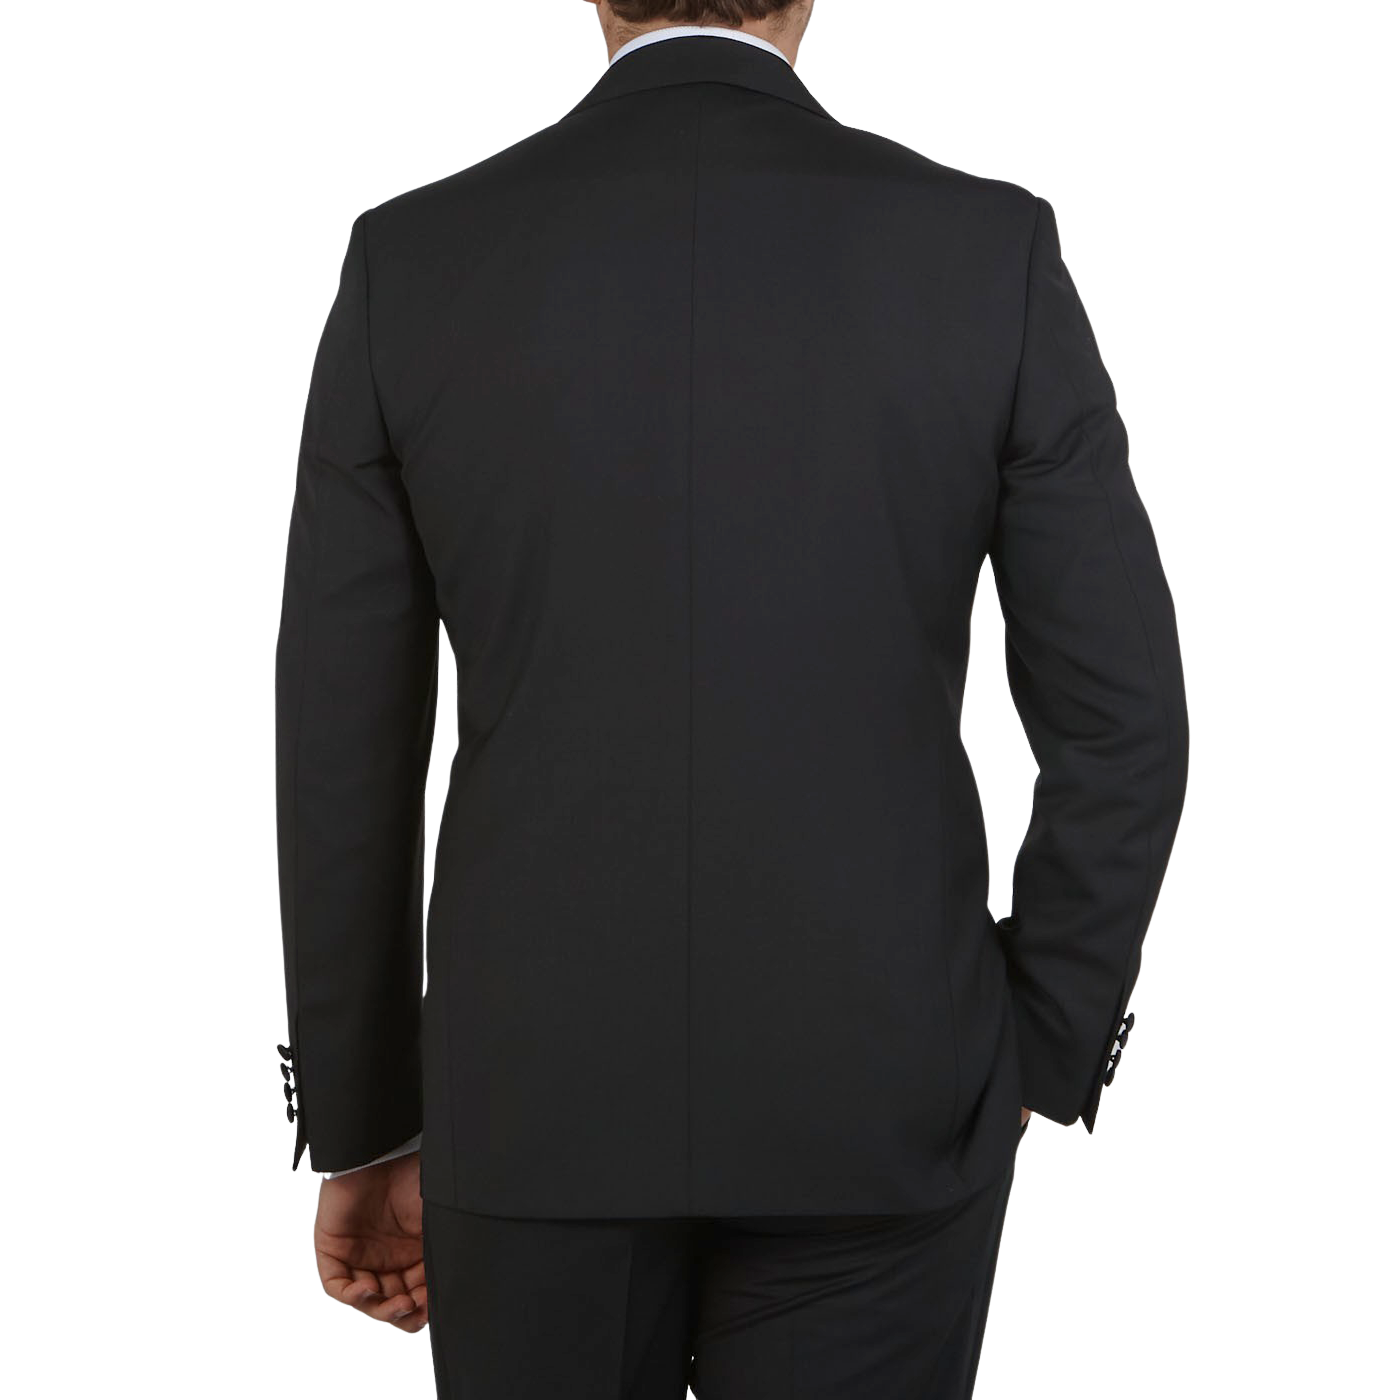 Canali Black Wool Peak Lapel Tuxedo Suit Back1